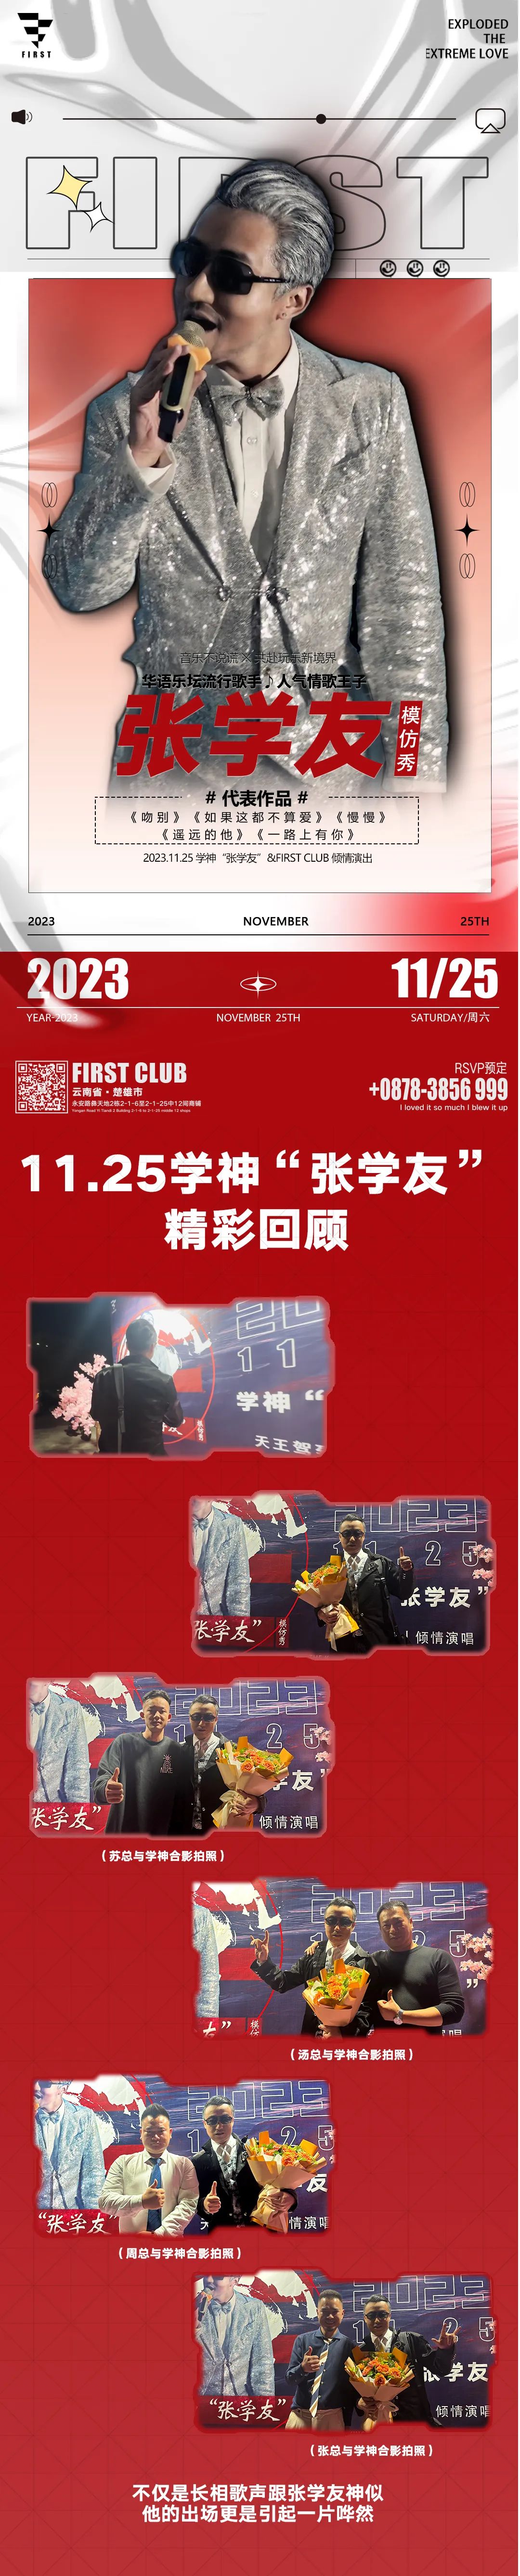 FIRST CLUB|张学友模仿秀精彩回顾-楚雄FIRST酒吧/FIRST CLUB